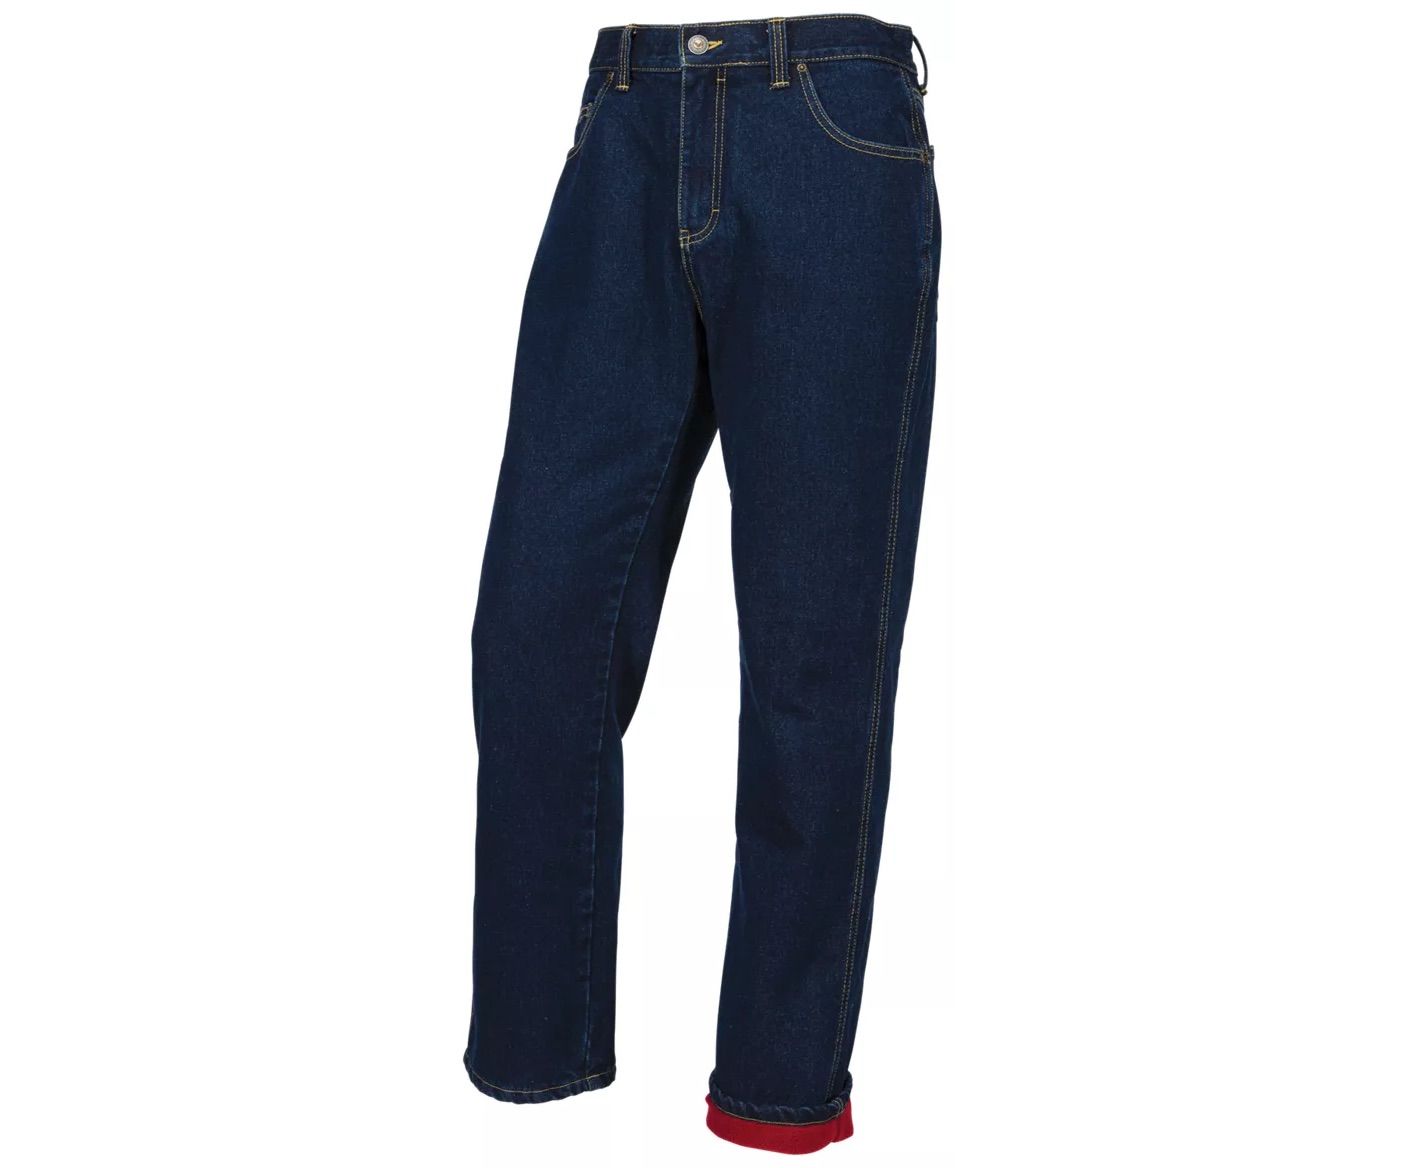 Cabela's Fleece-Lined Jeans Review 2020